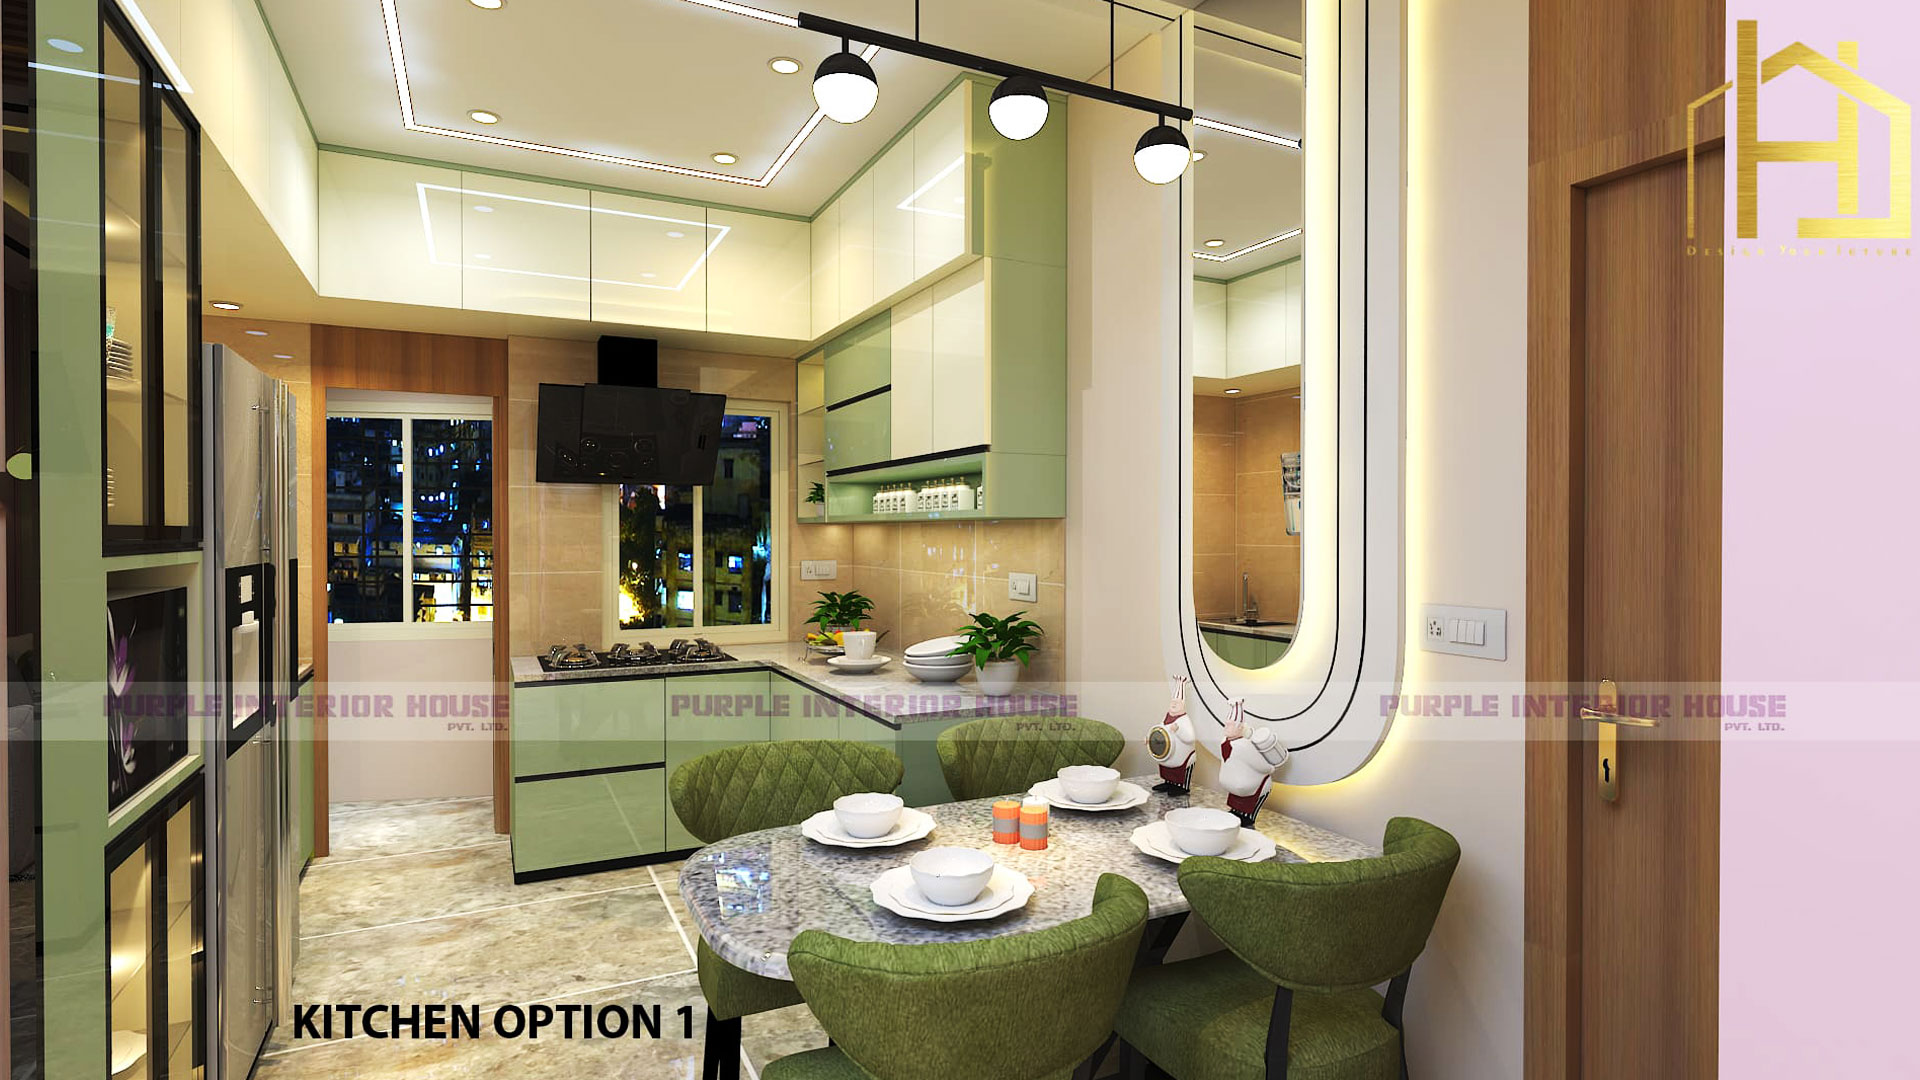 Purple Interior House is a Kolkata based service provider for interior design and renovation